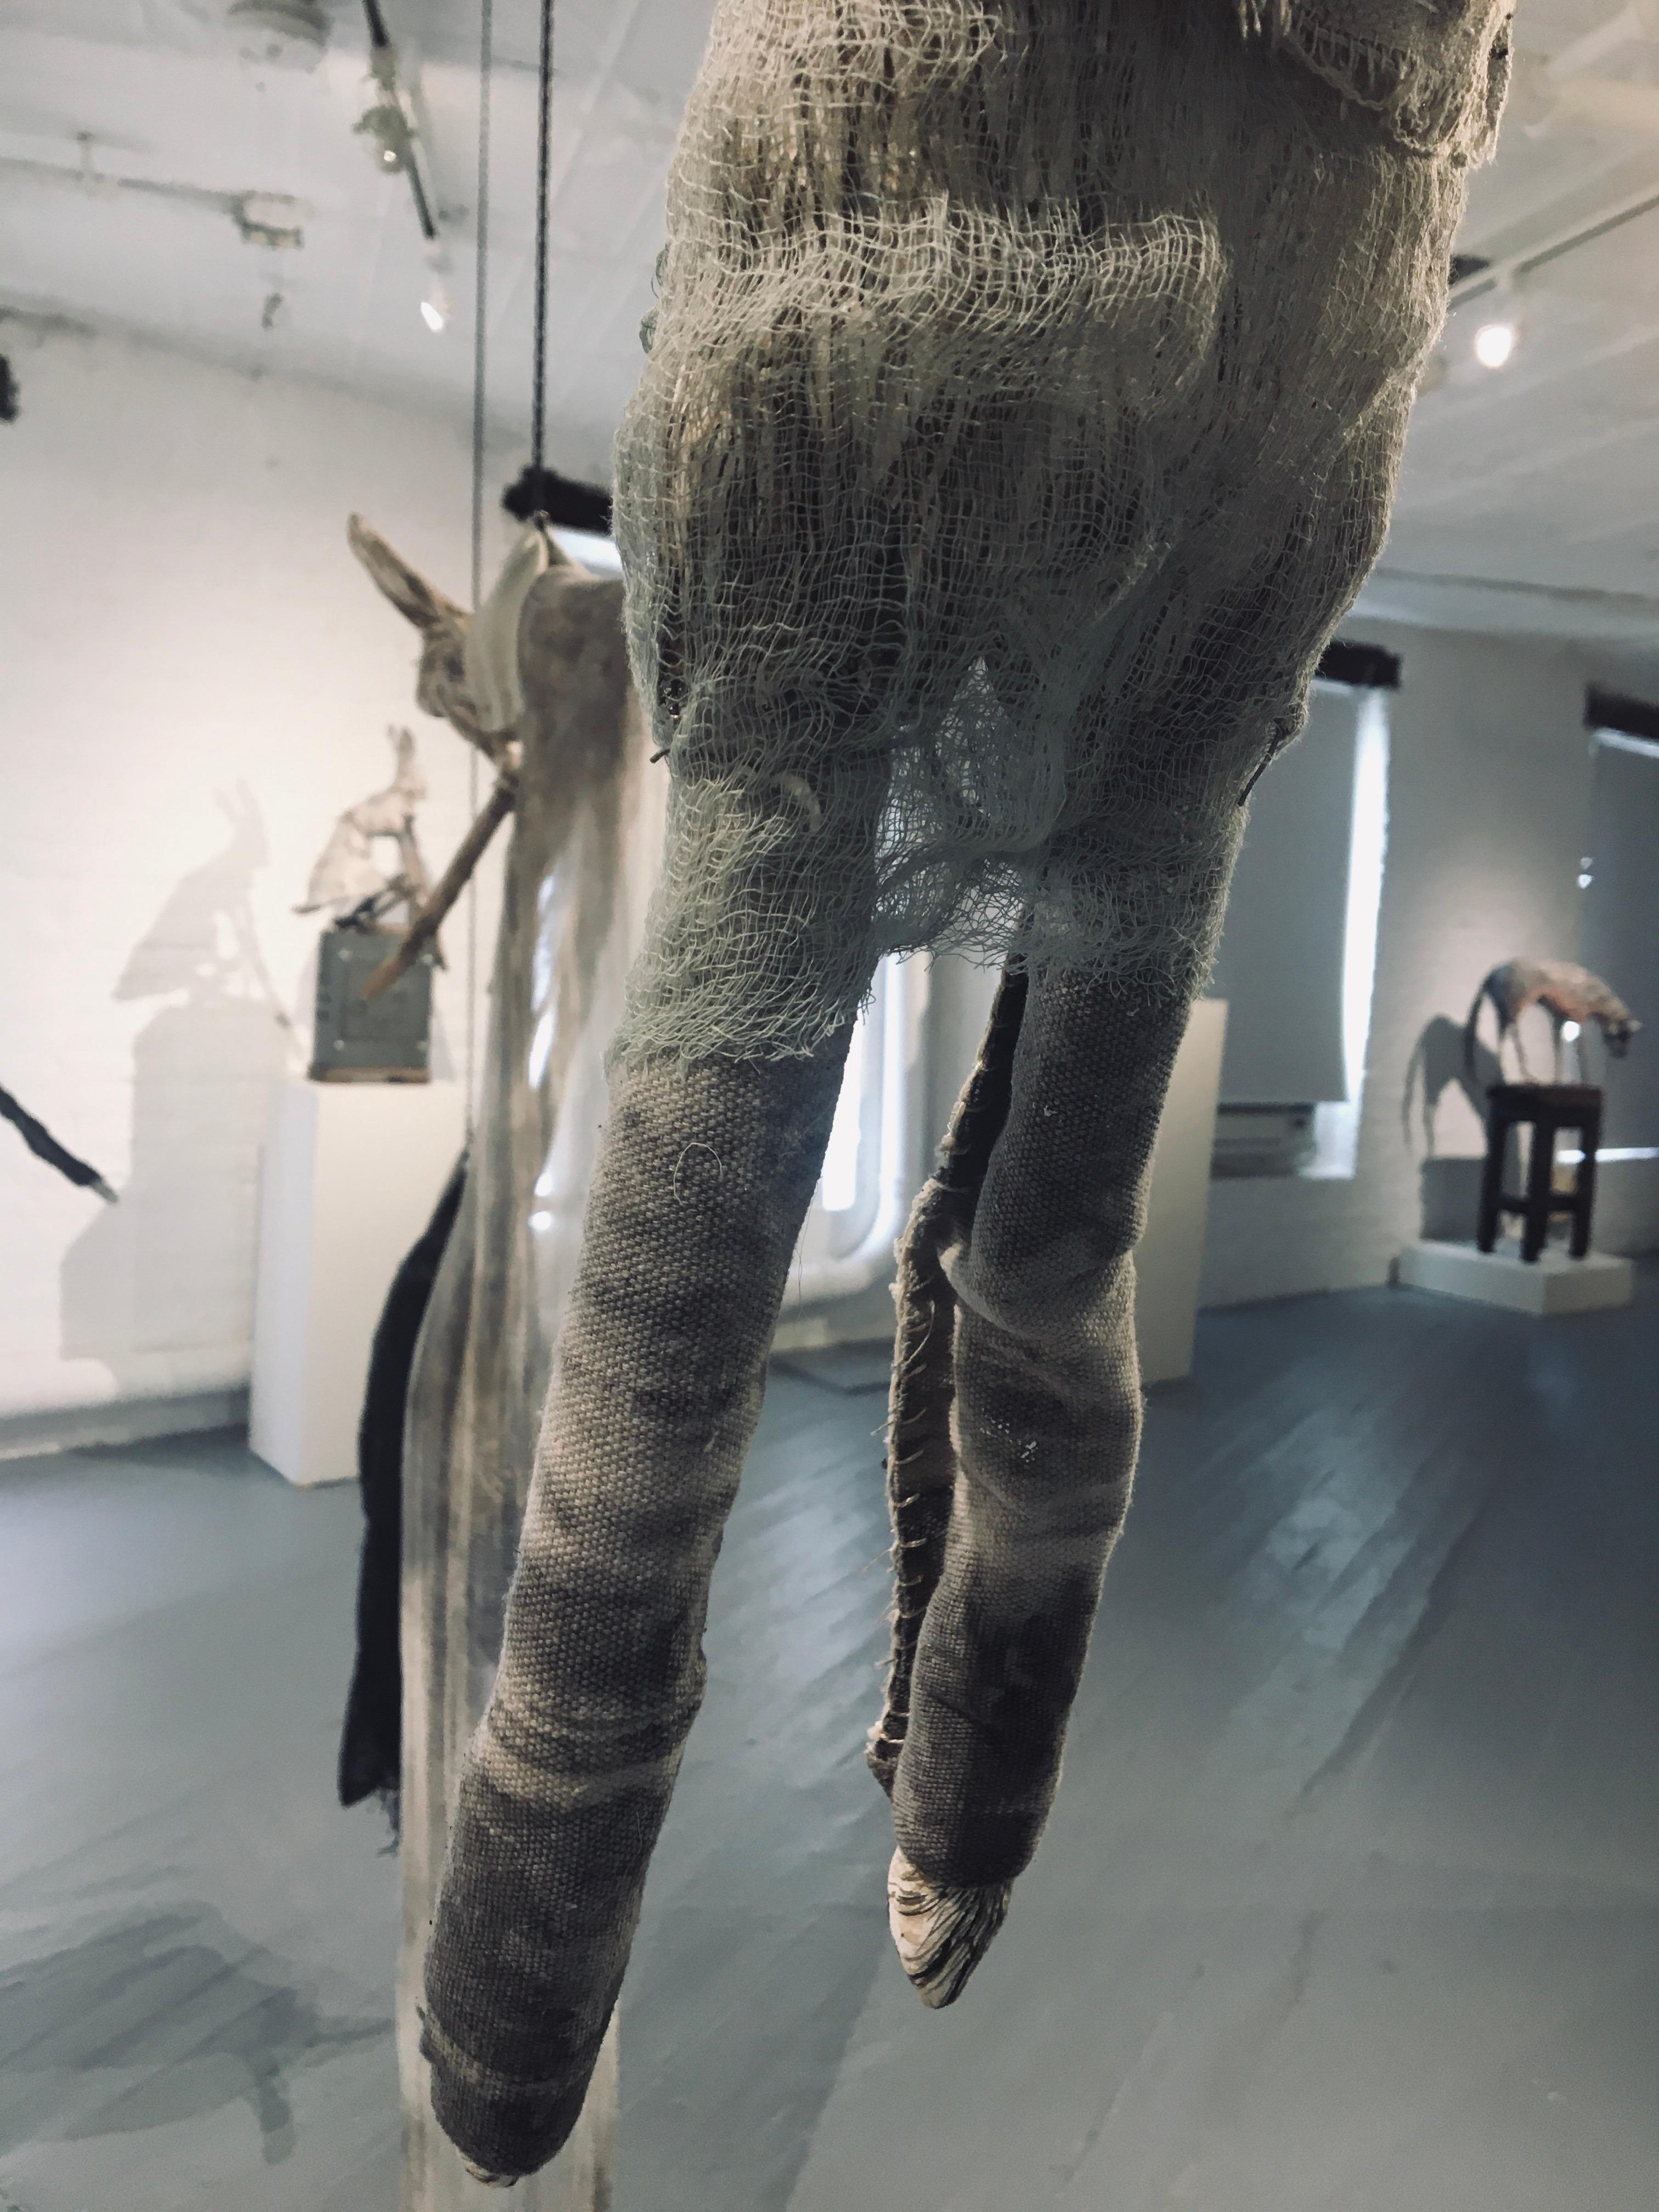 suspended sculptures